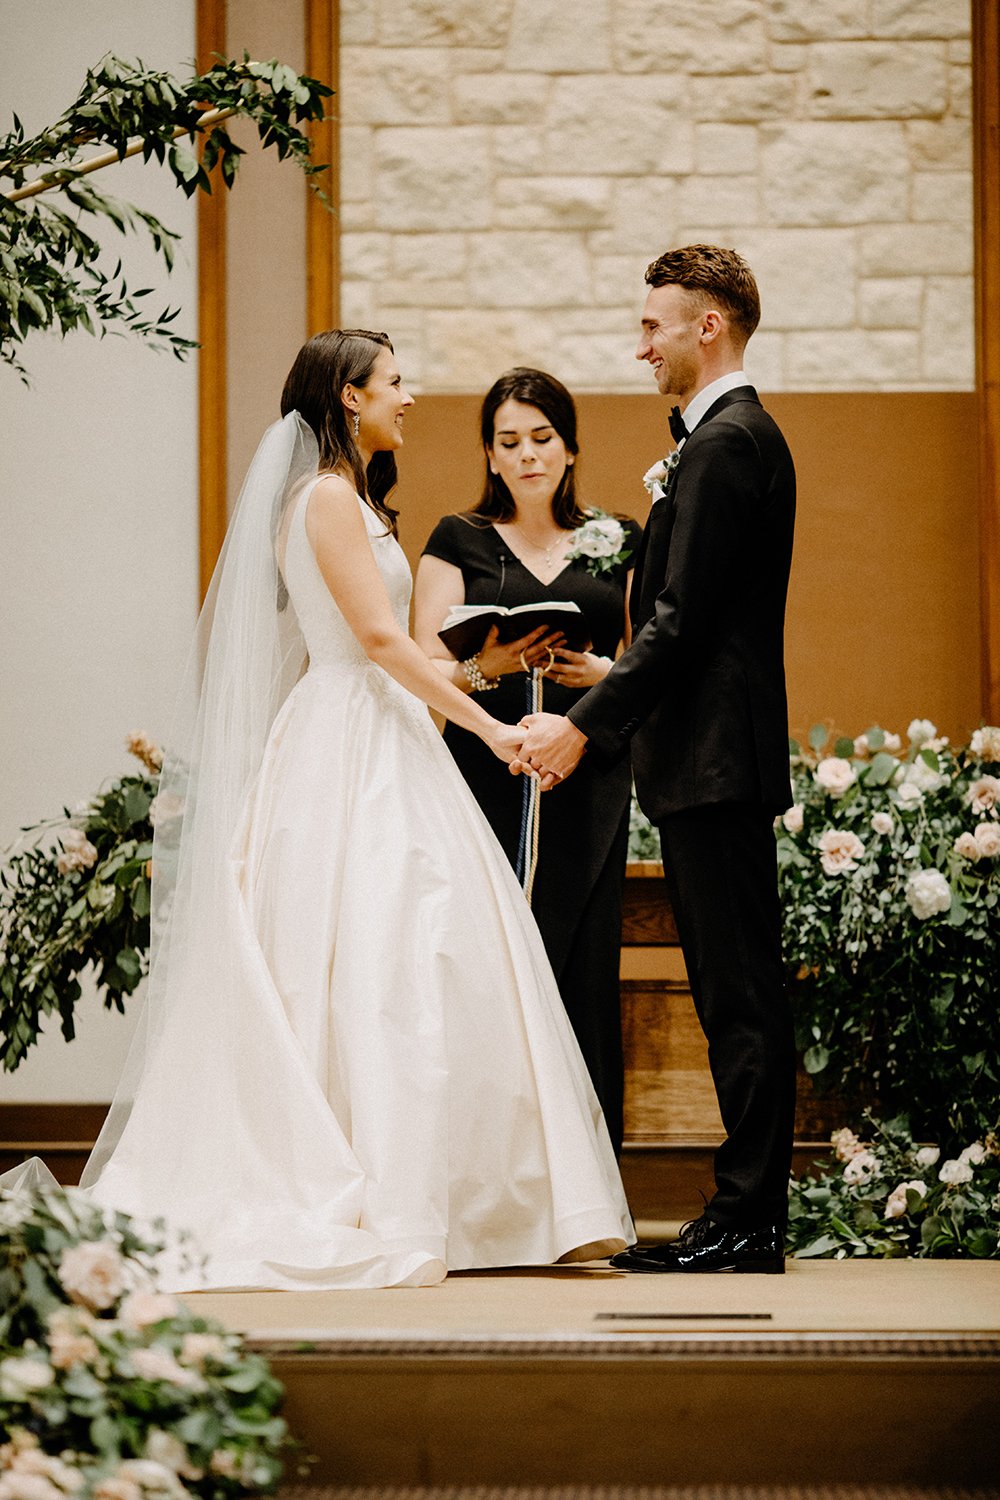 wedding - church ceremony - bride - groom